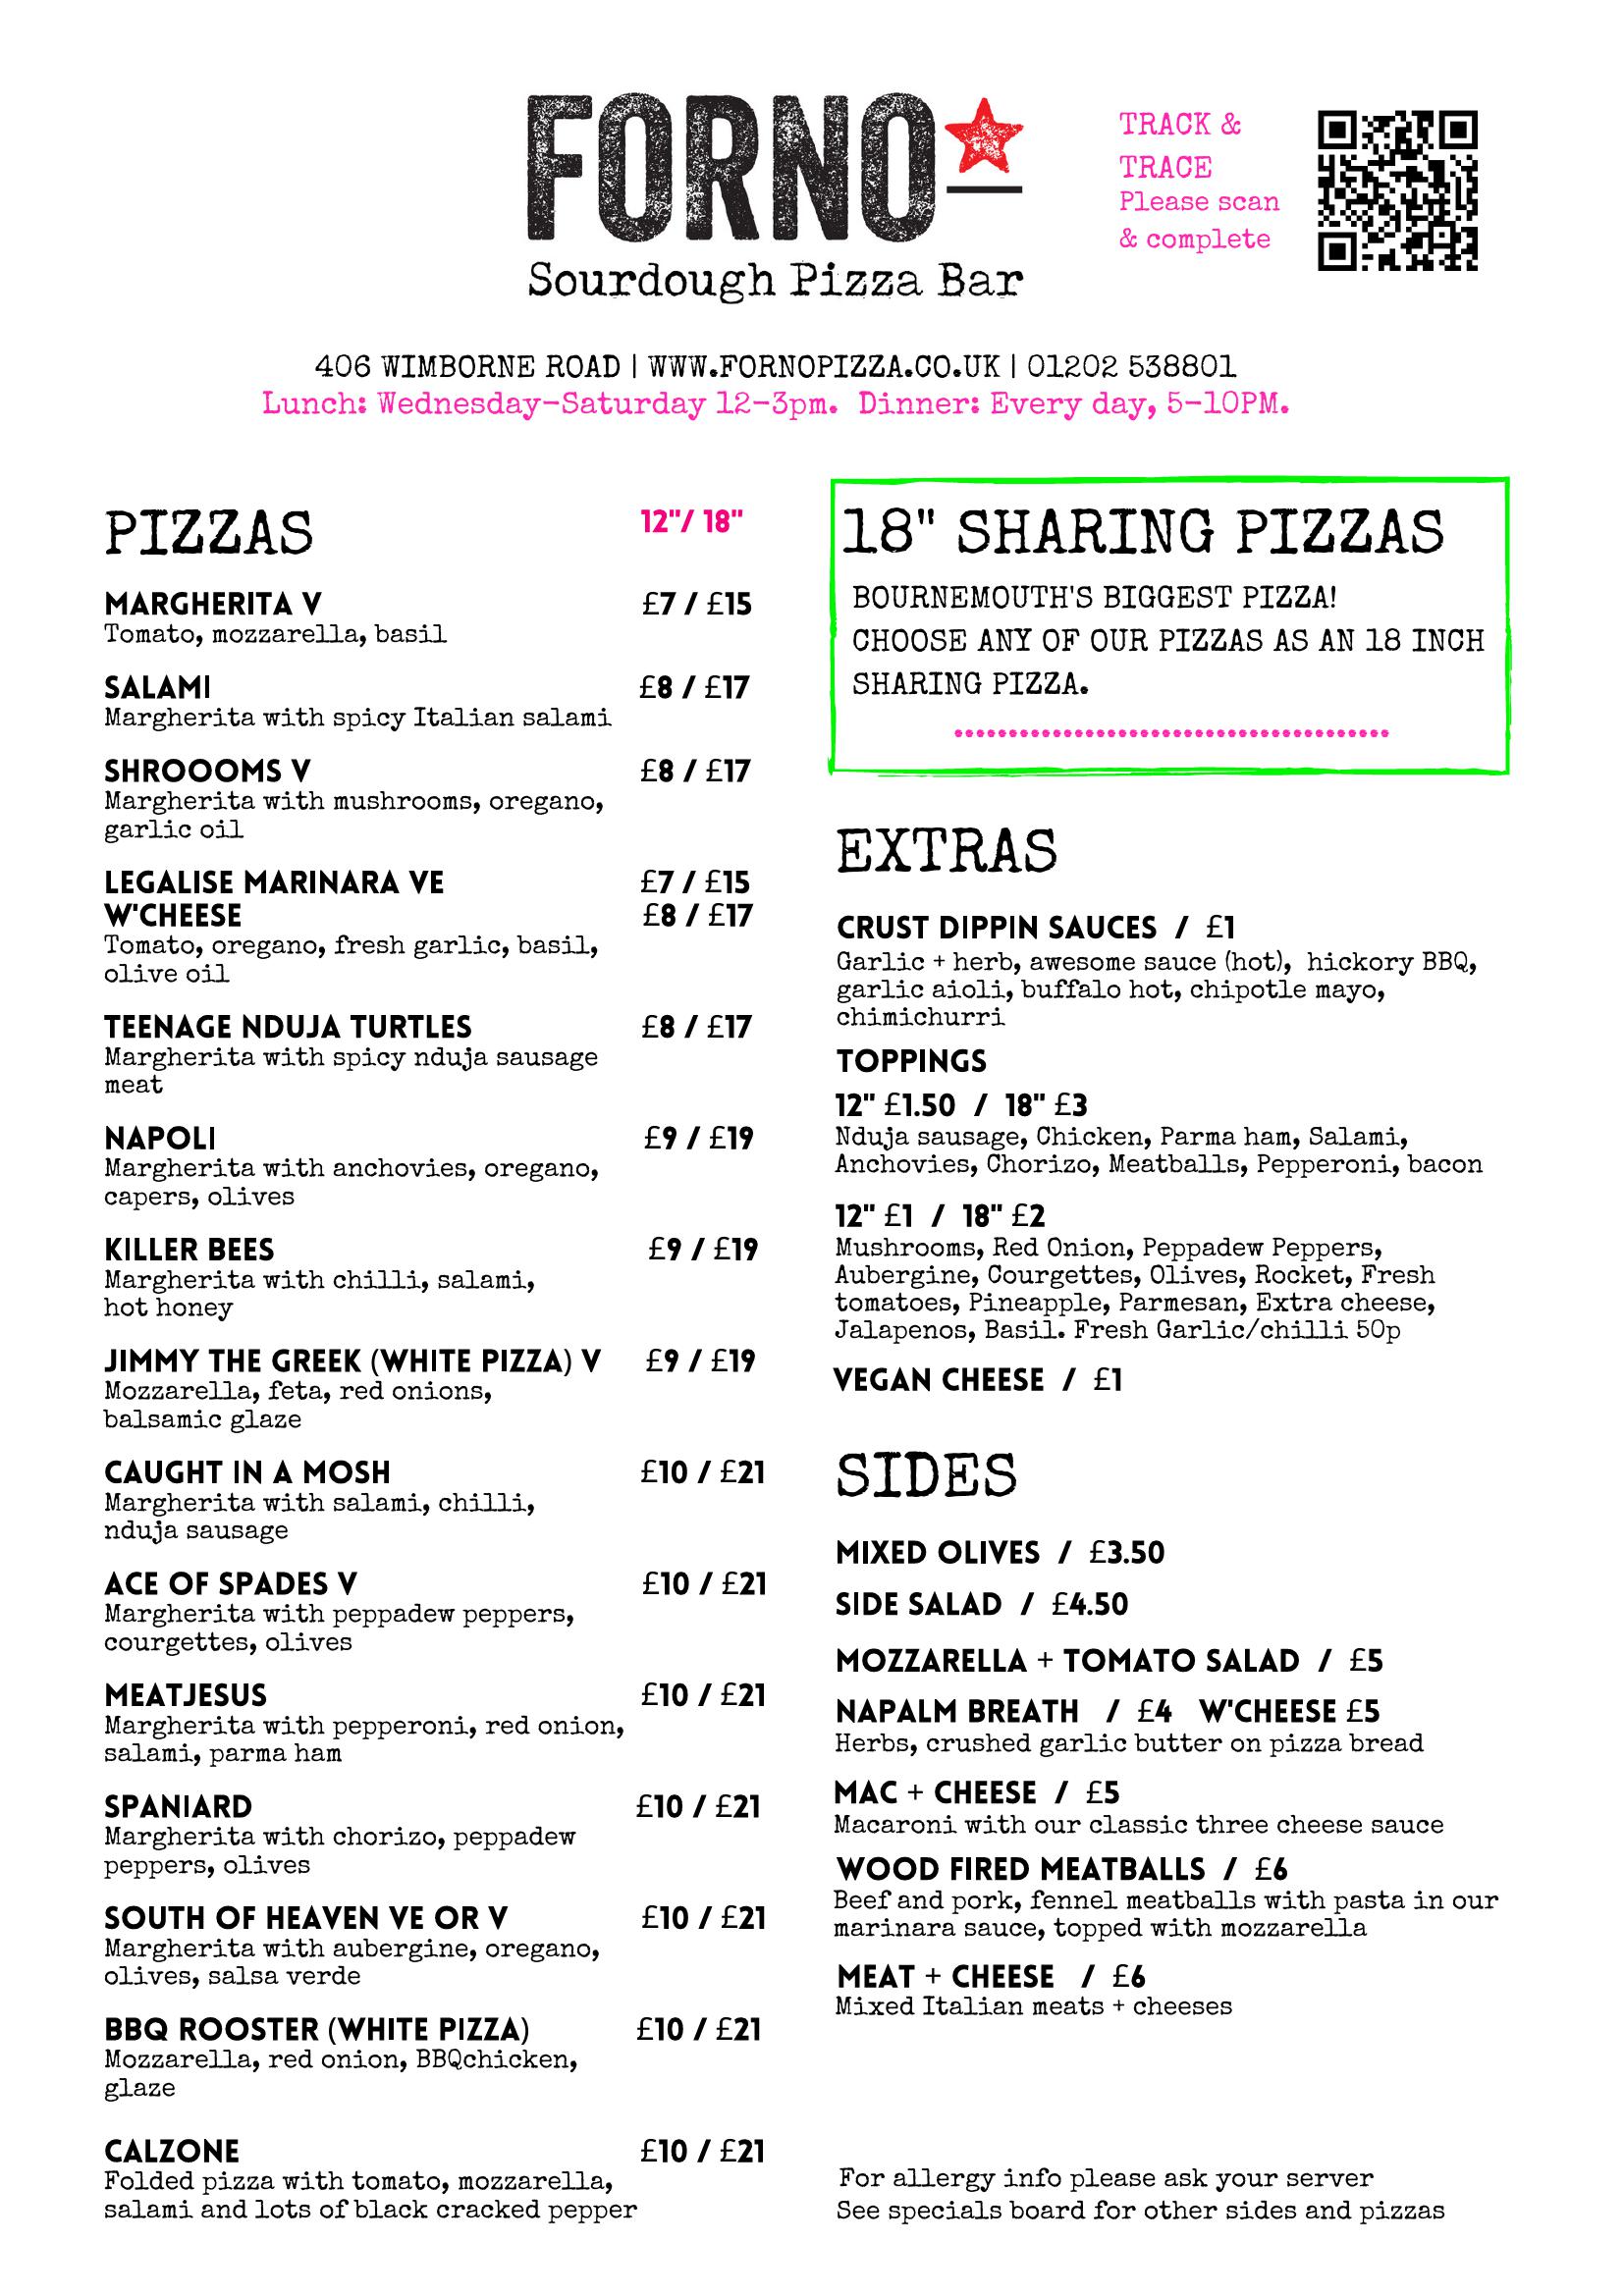 Forno sourdough pizza bar - main menu